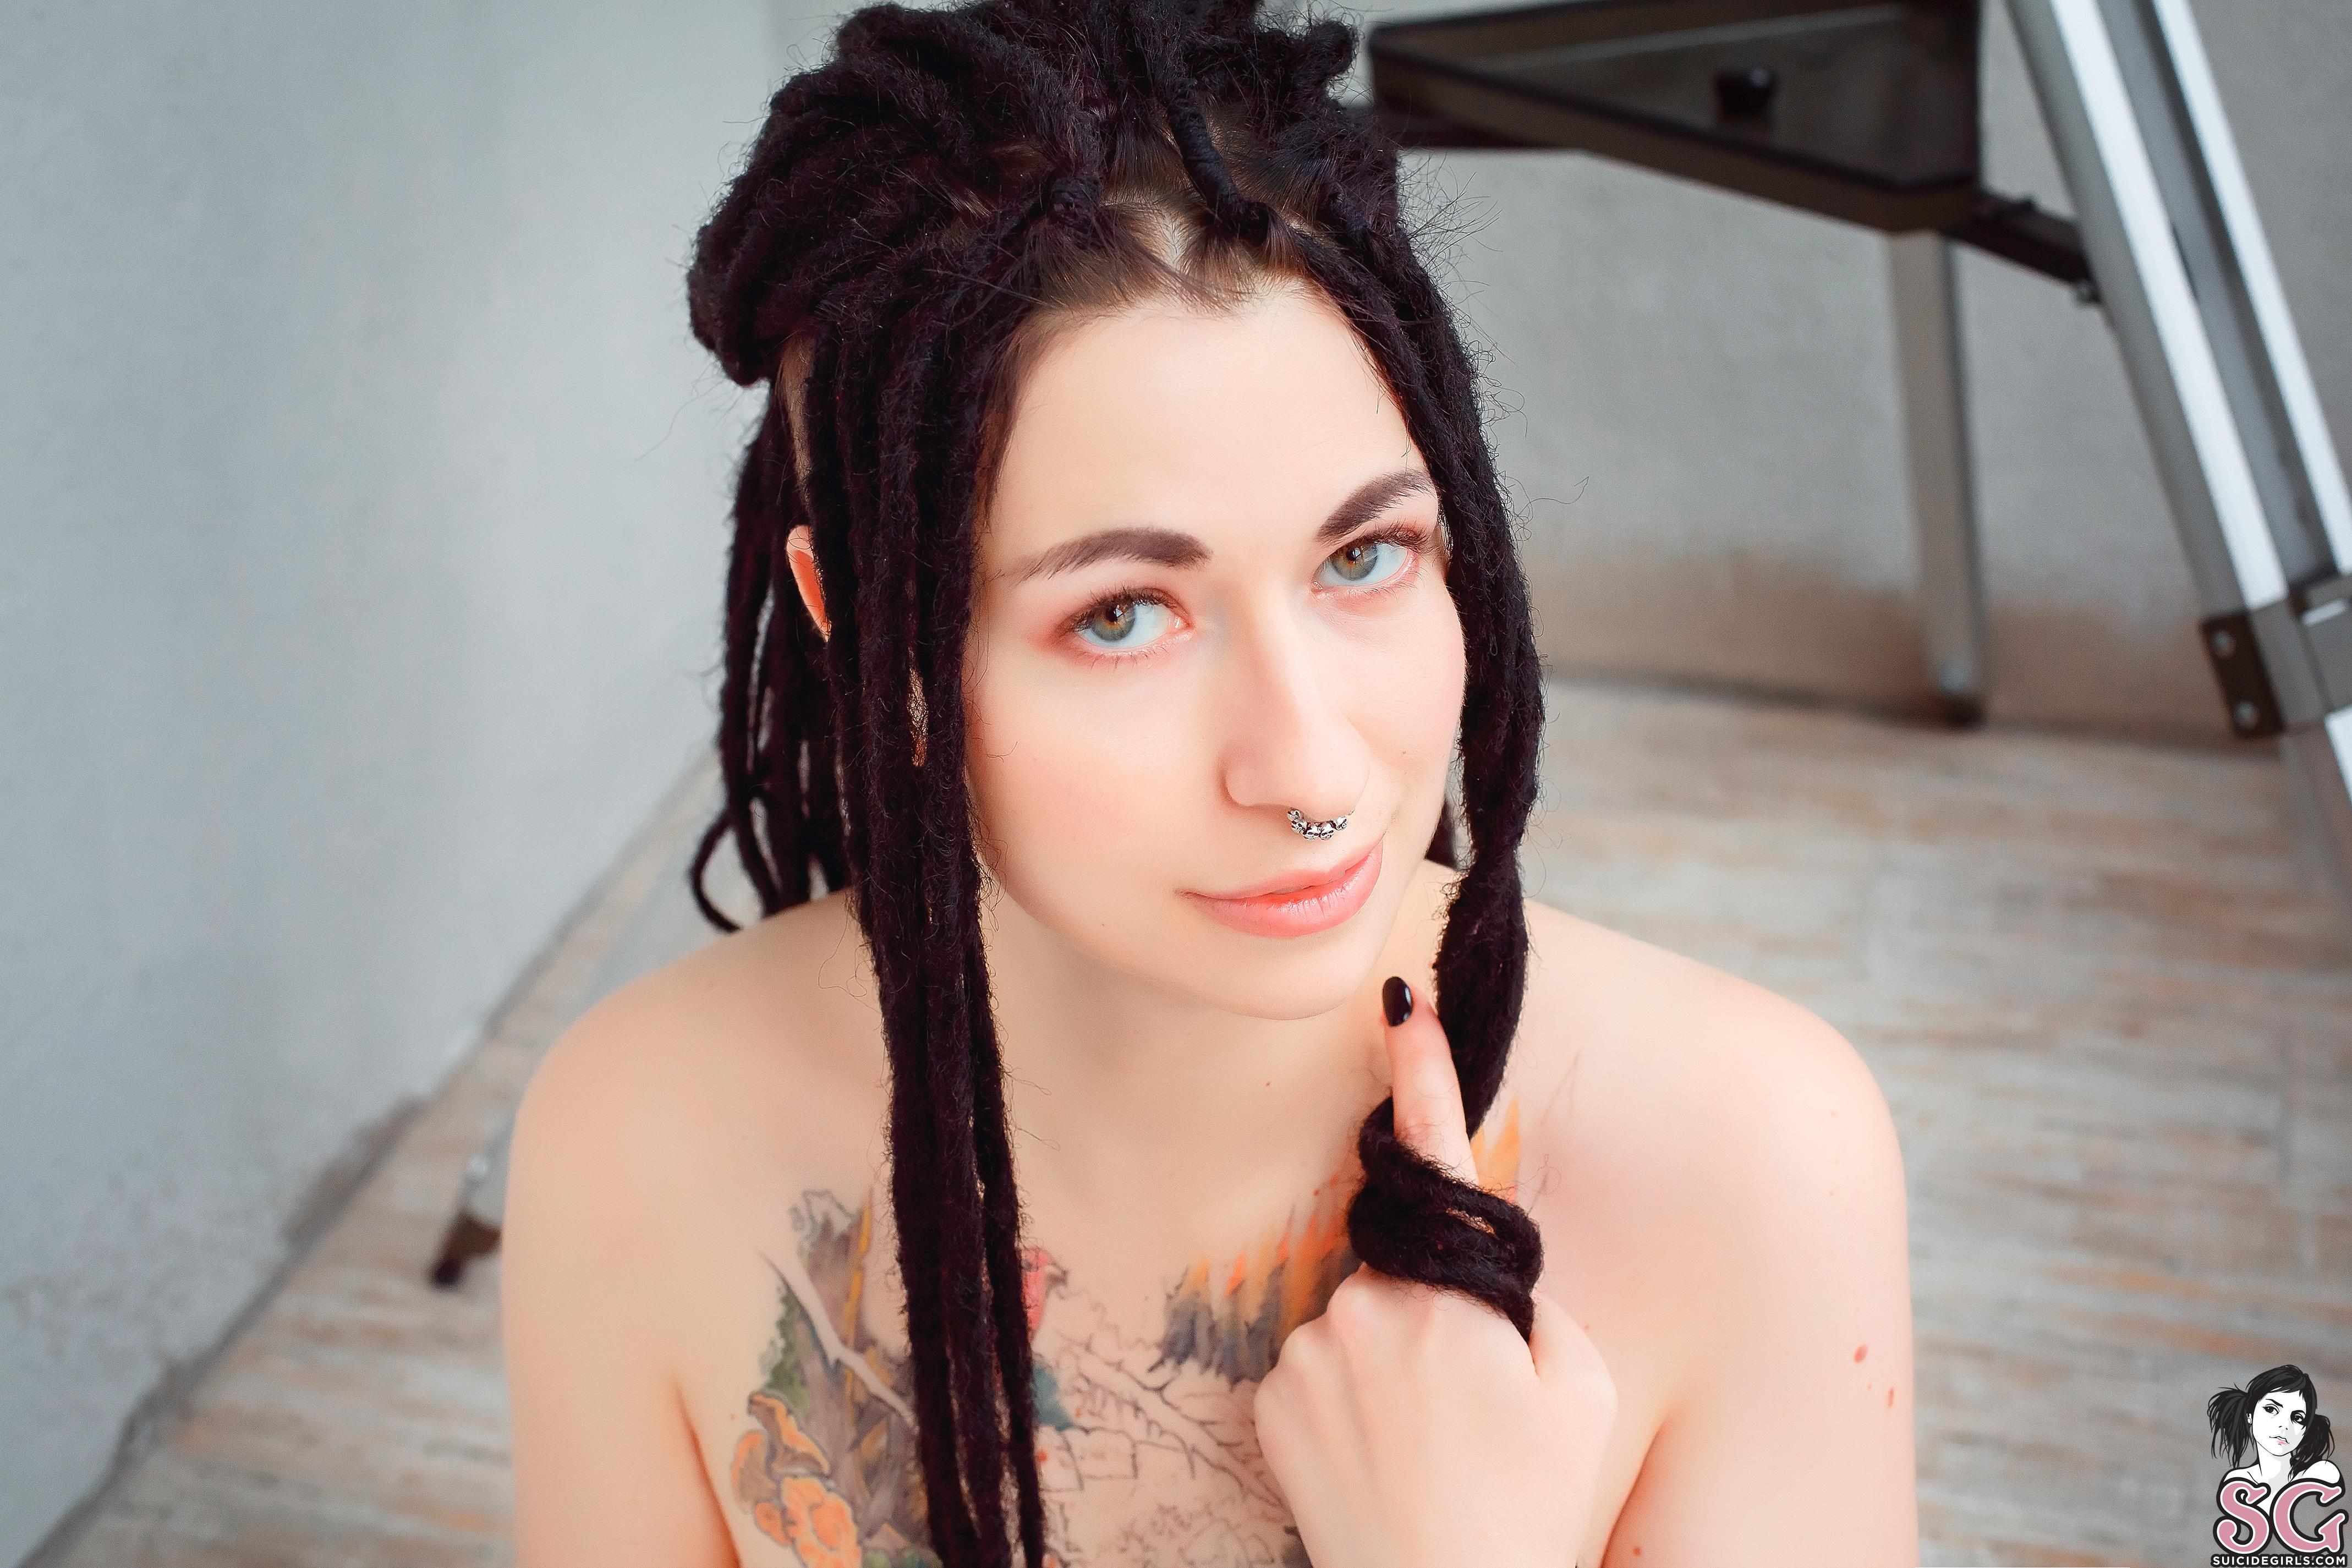 People 4275x2850 Daniellenoire Suicide Suicide Girls tattoo dreadlocks pale dark hair topless model women closeup watermarked